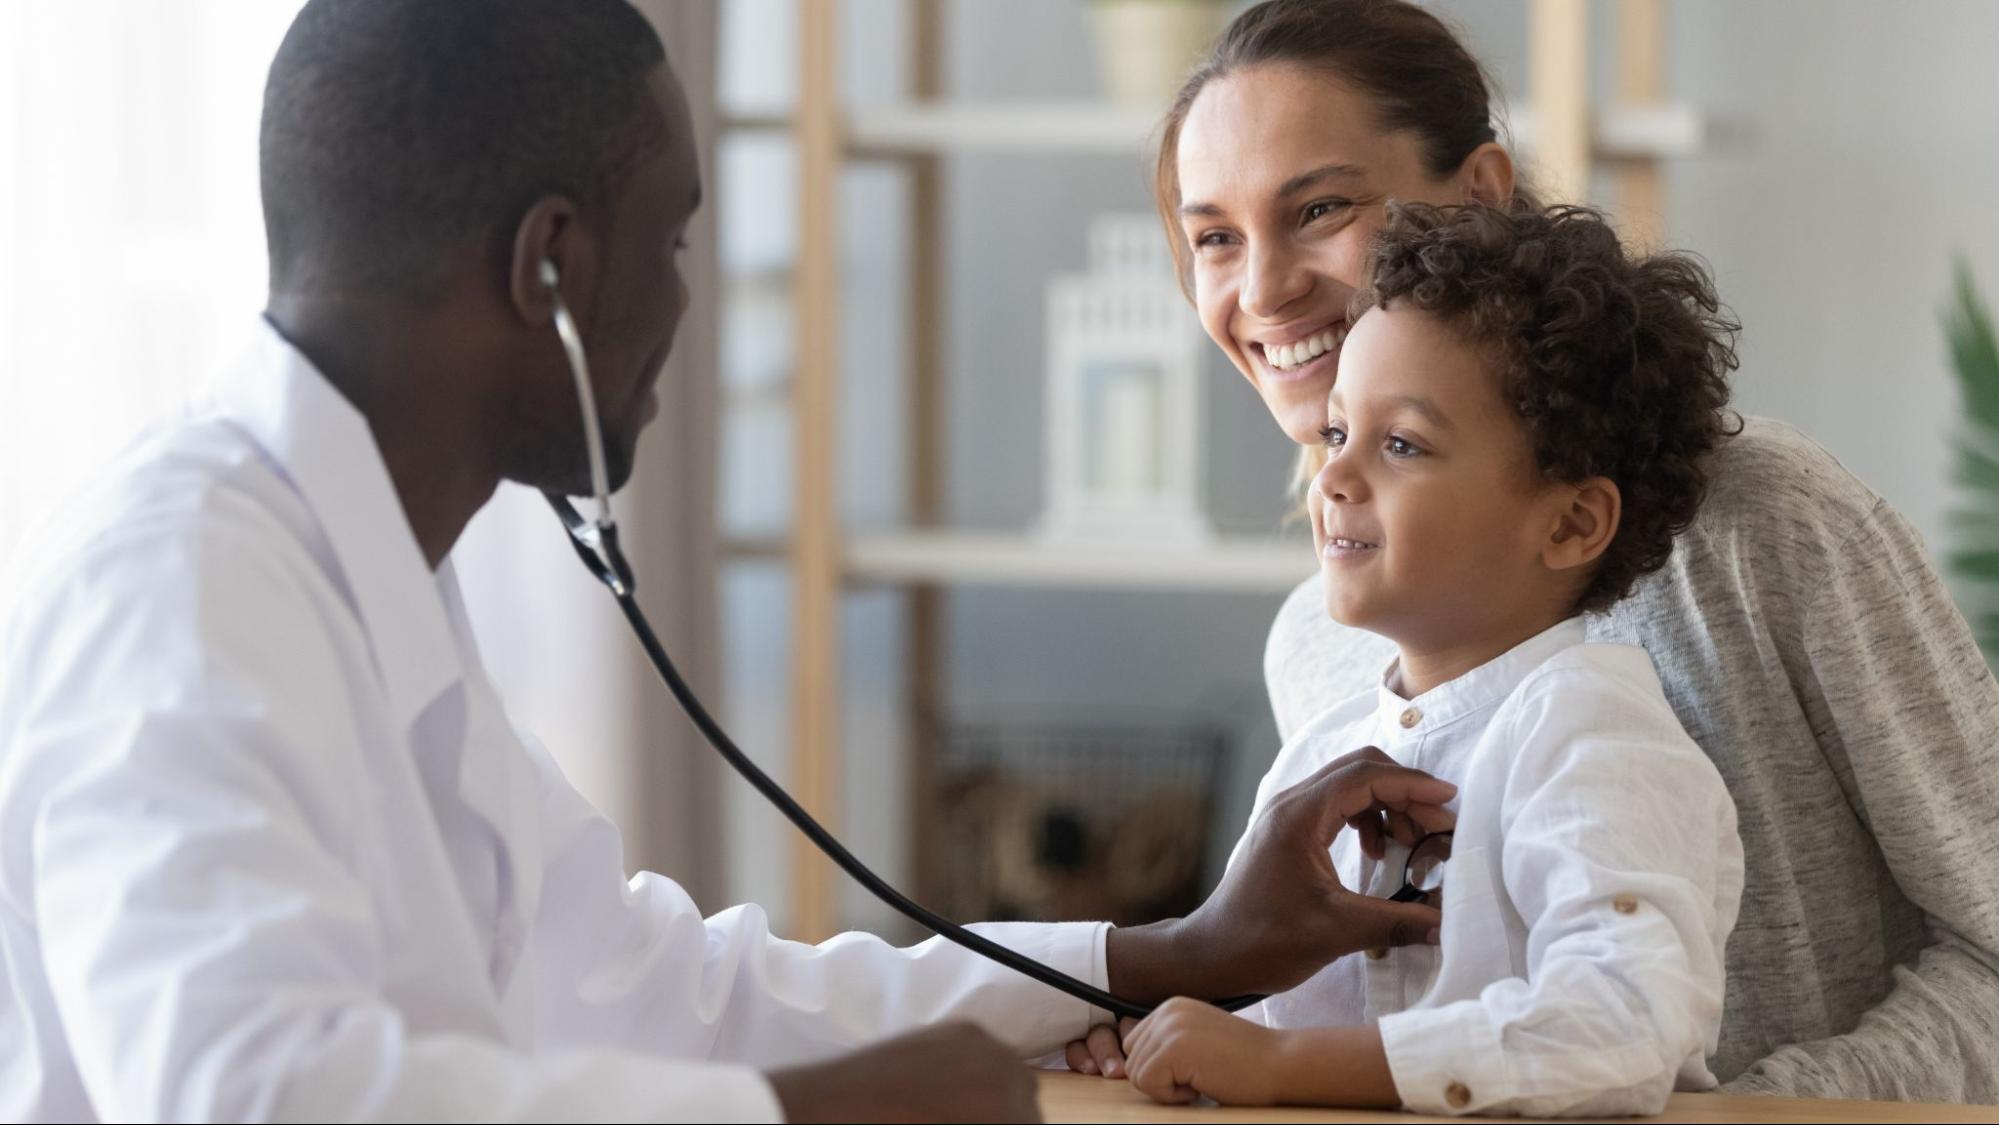 doctor examining child with stethoscope